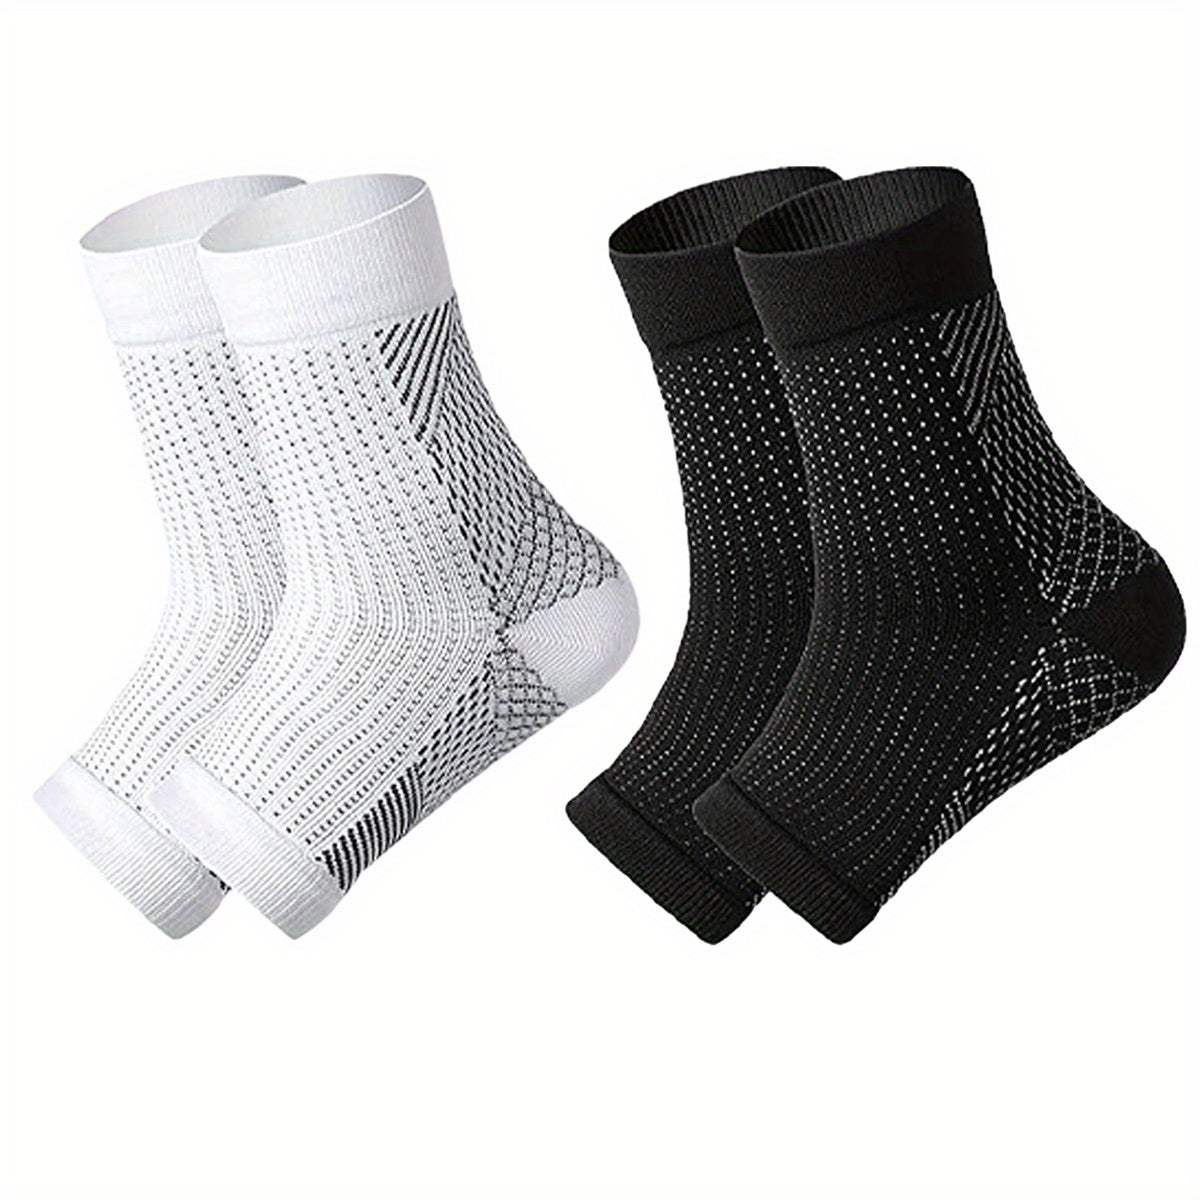 Durable design of Black Neuropathy Compression Socks